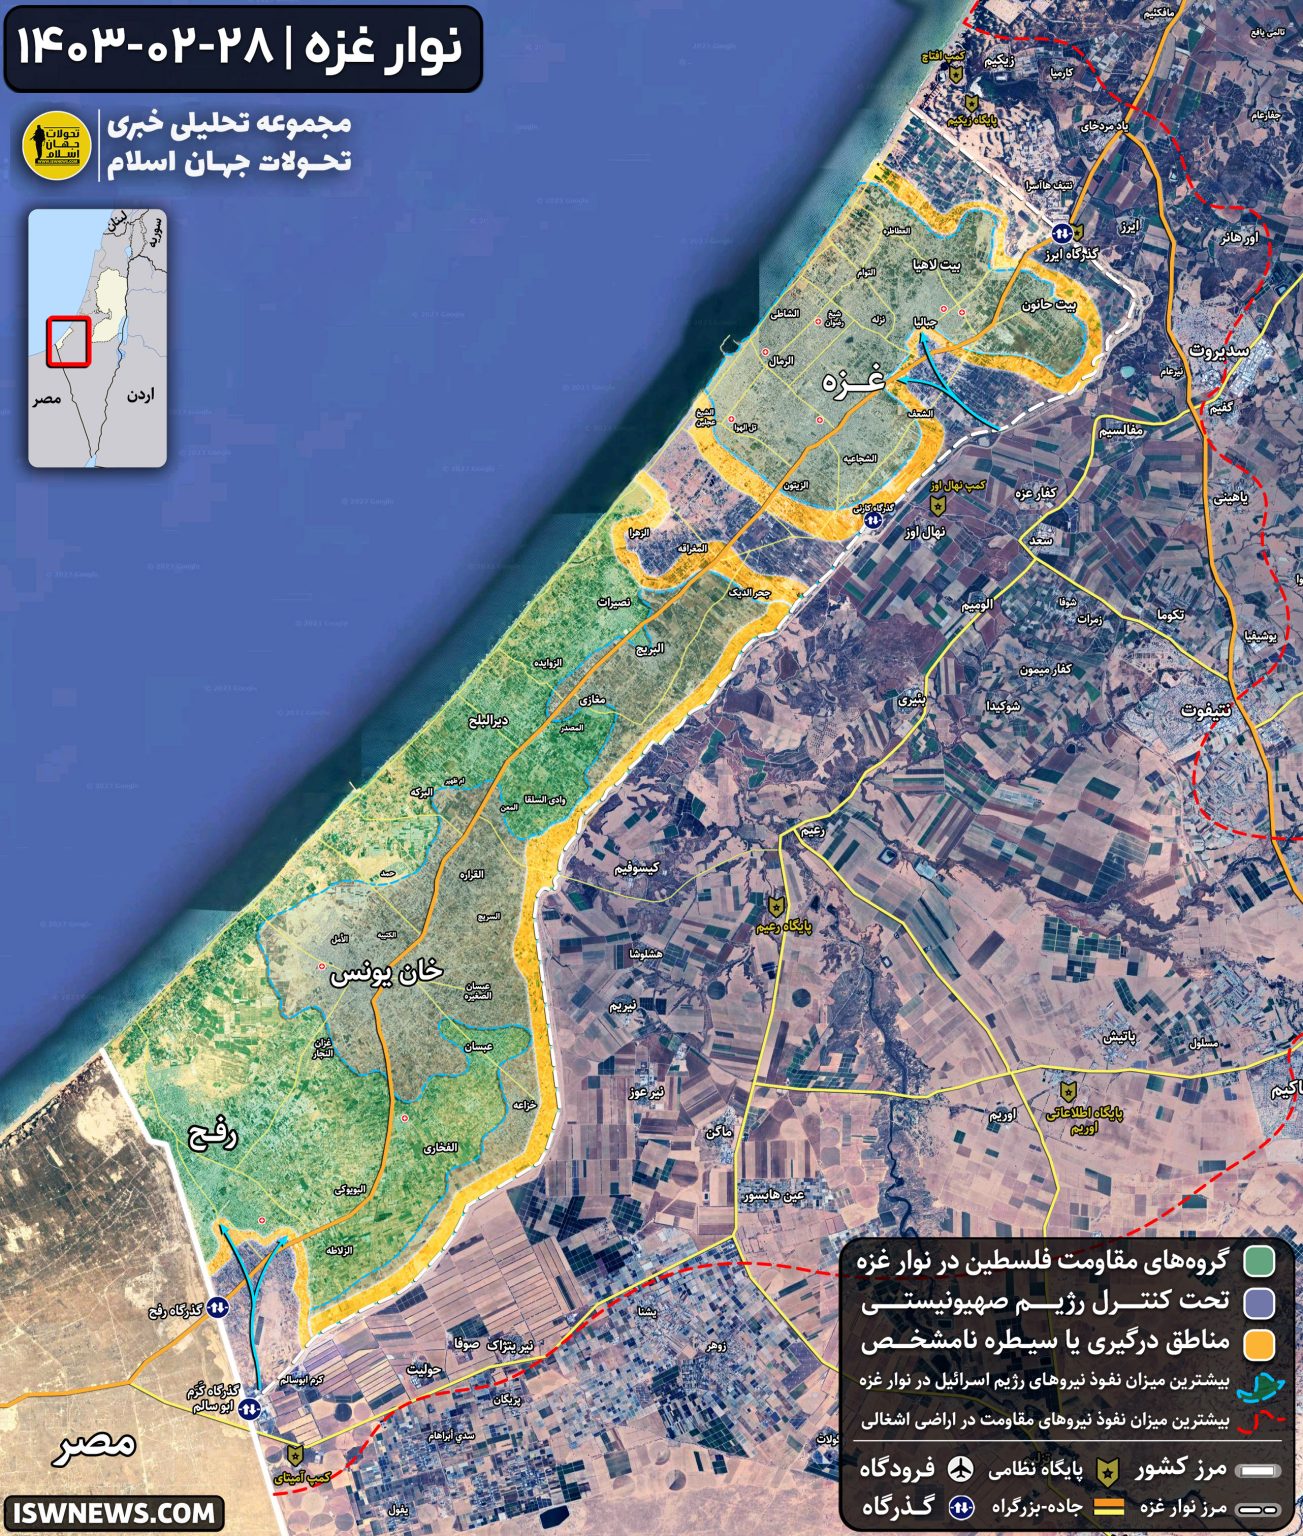 Gaza-map-fa-28ord93-1303x1536.jpg